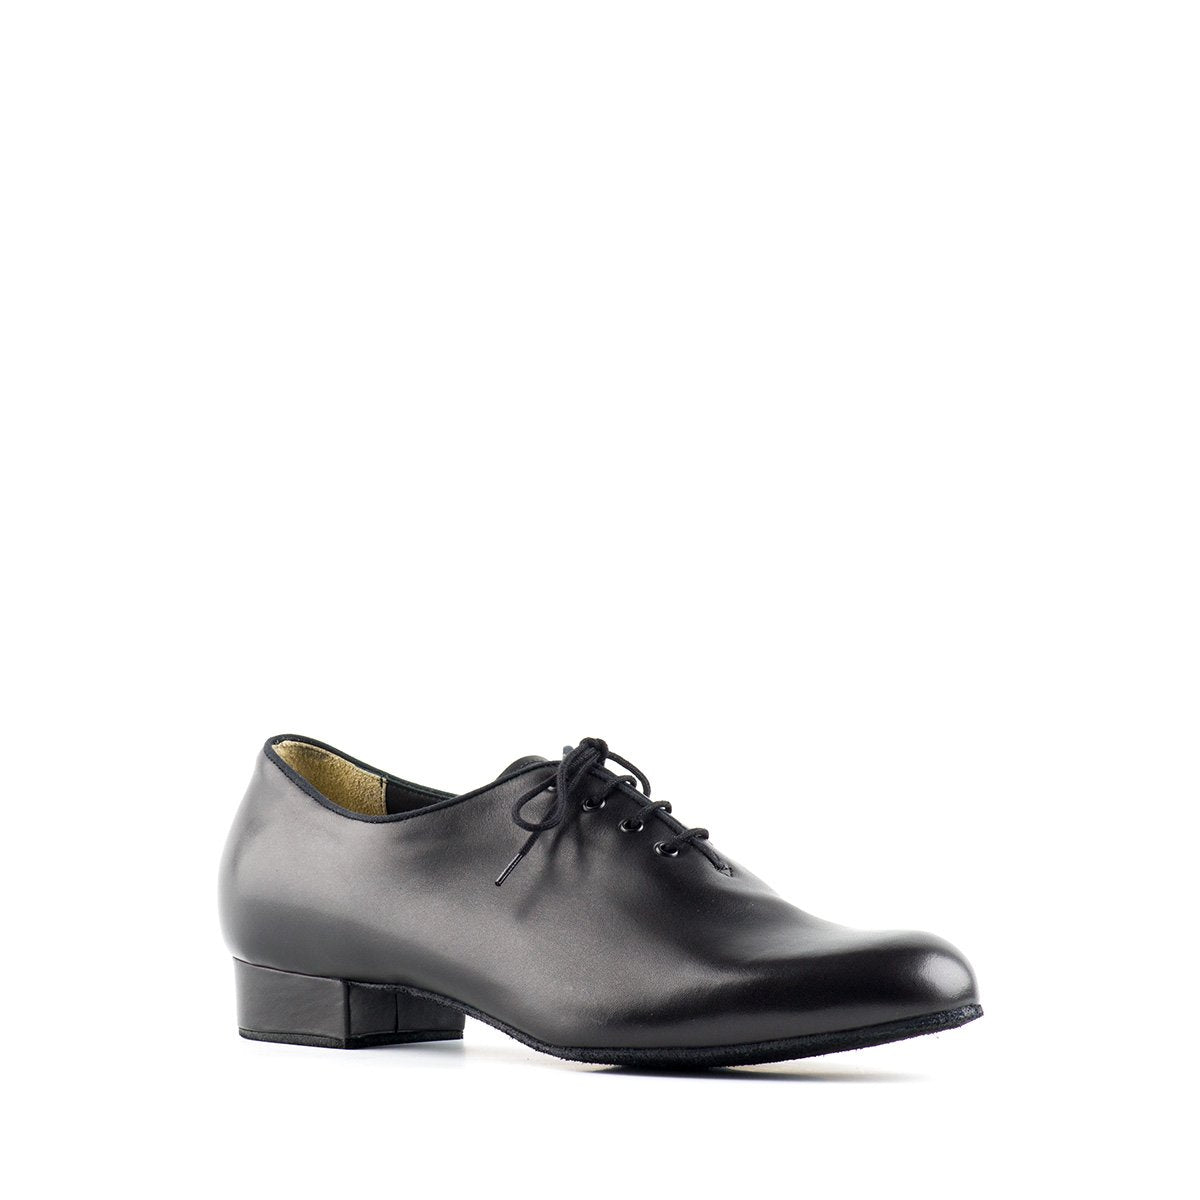 Men's ballroom dance shoe in black leather